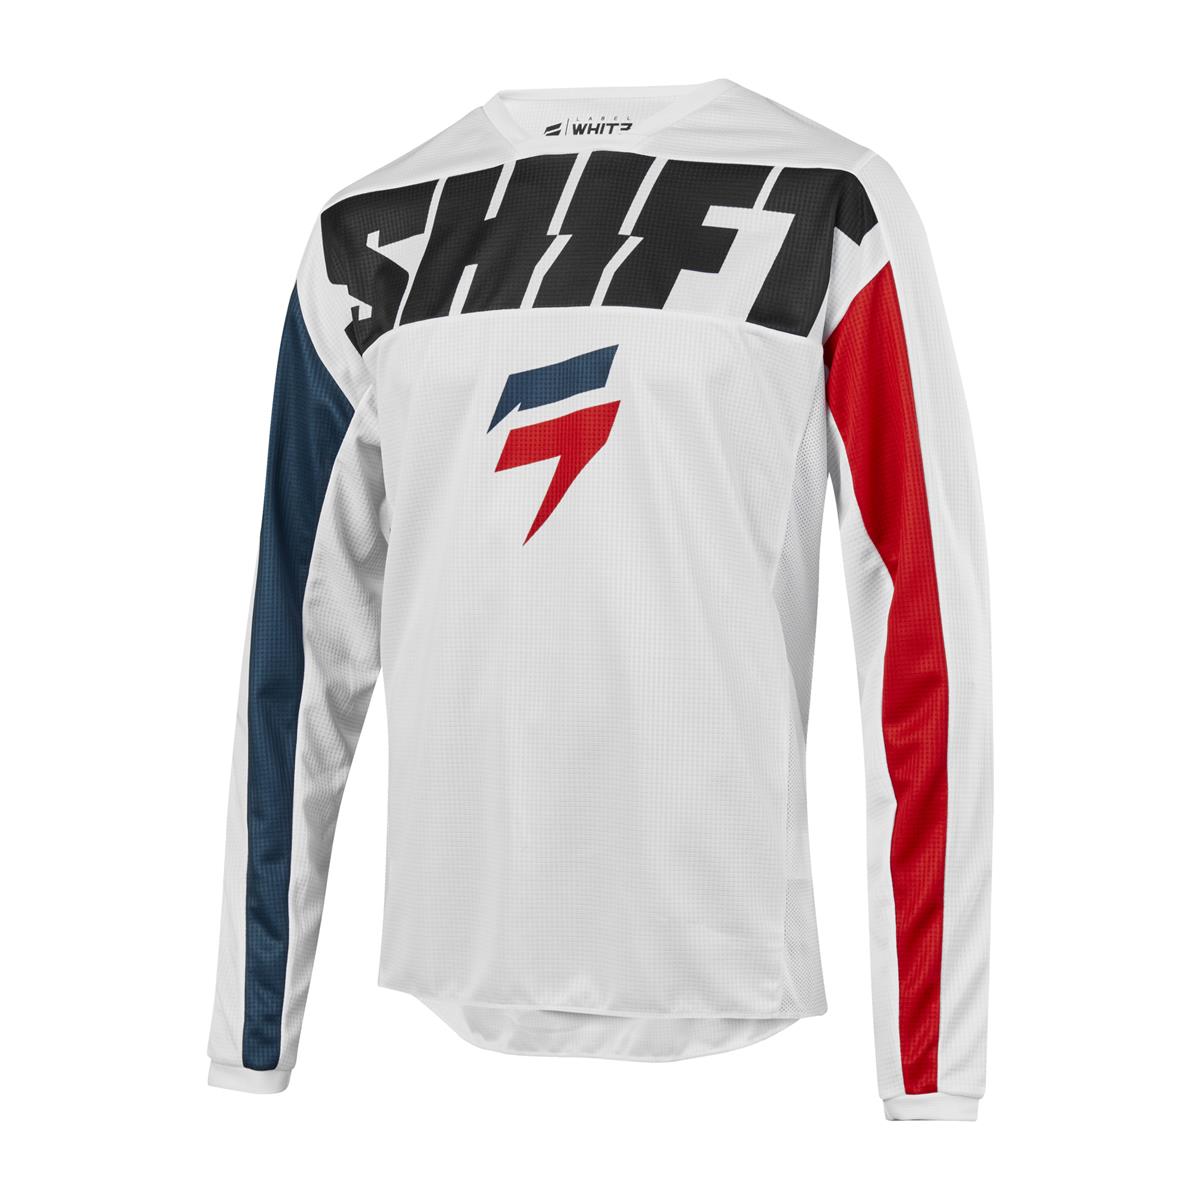 Shift Jersey Whit3 Label York White